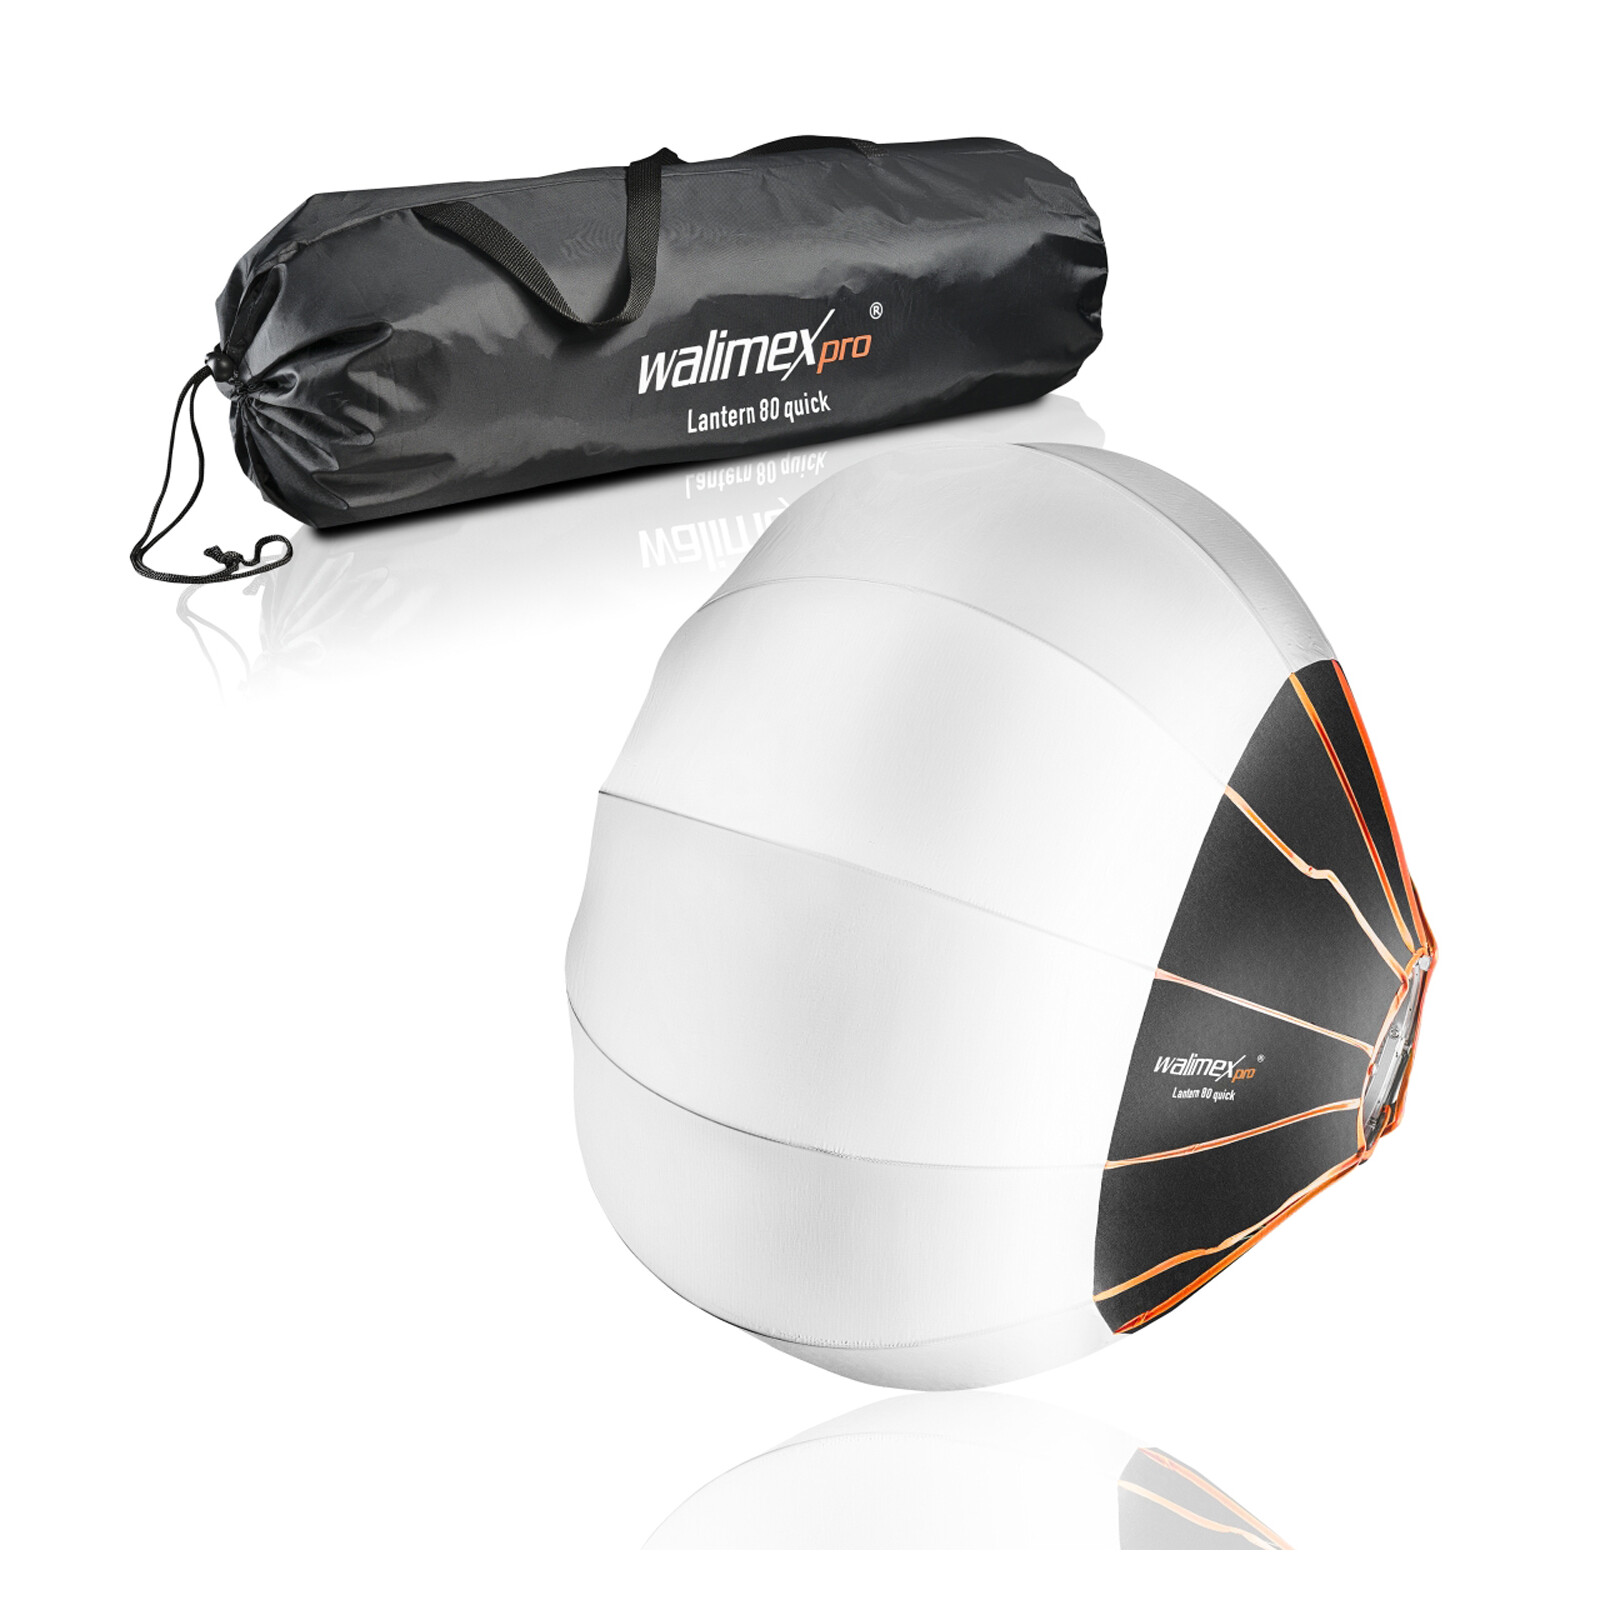 Walimex pro 360° Ambient Light Softbox 80cm Elinchrom